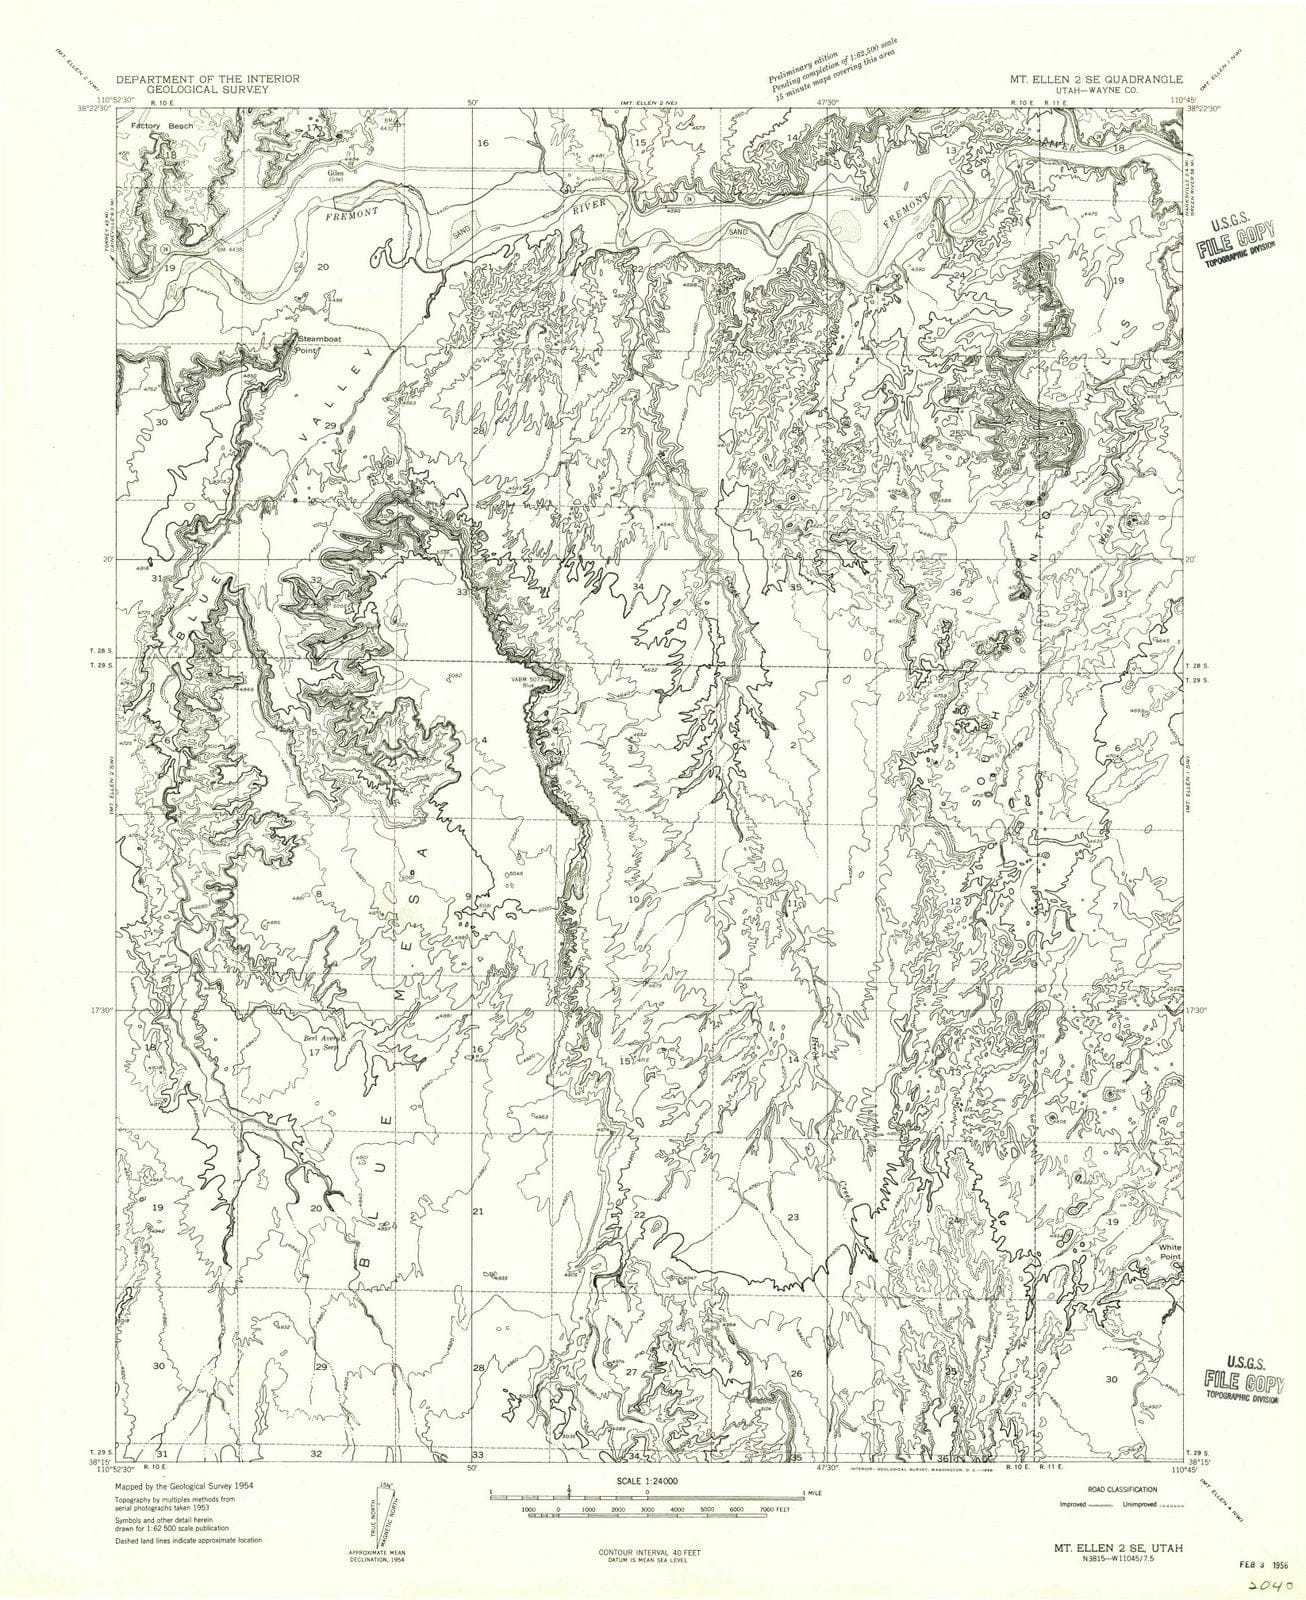 1954 Mt. Ellen 2, UT - Utah - USGS Topographic Map v3